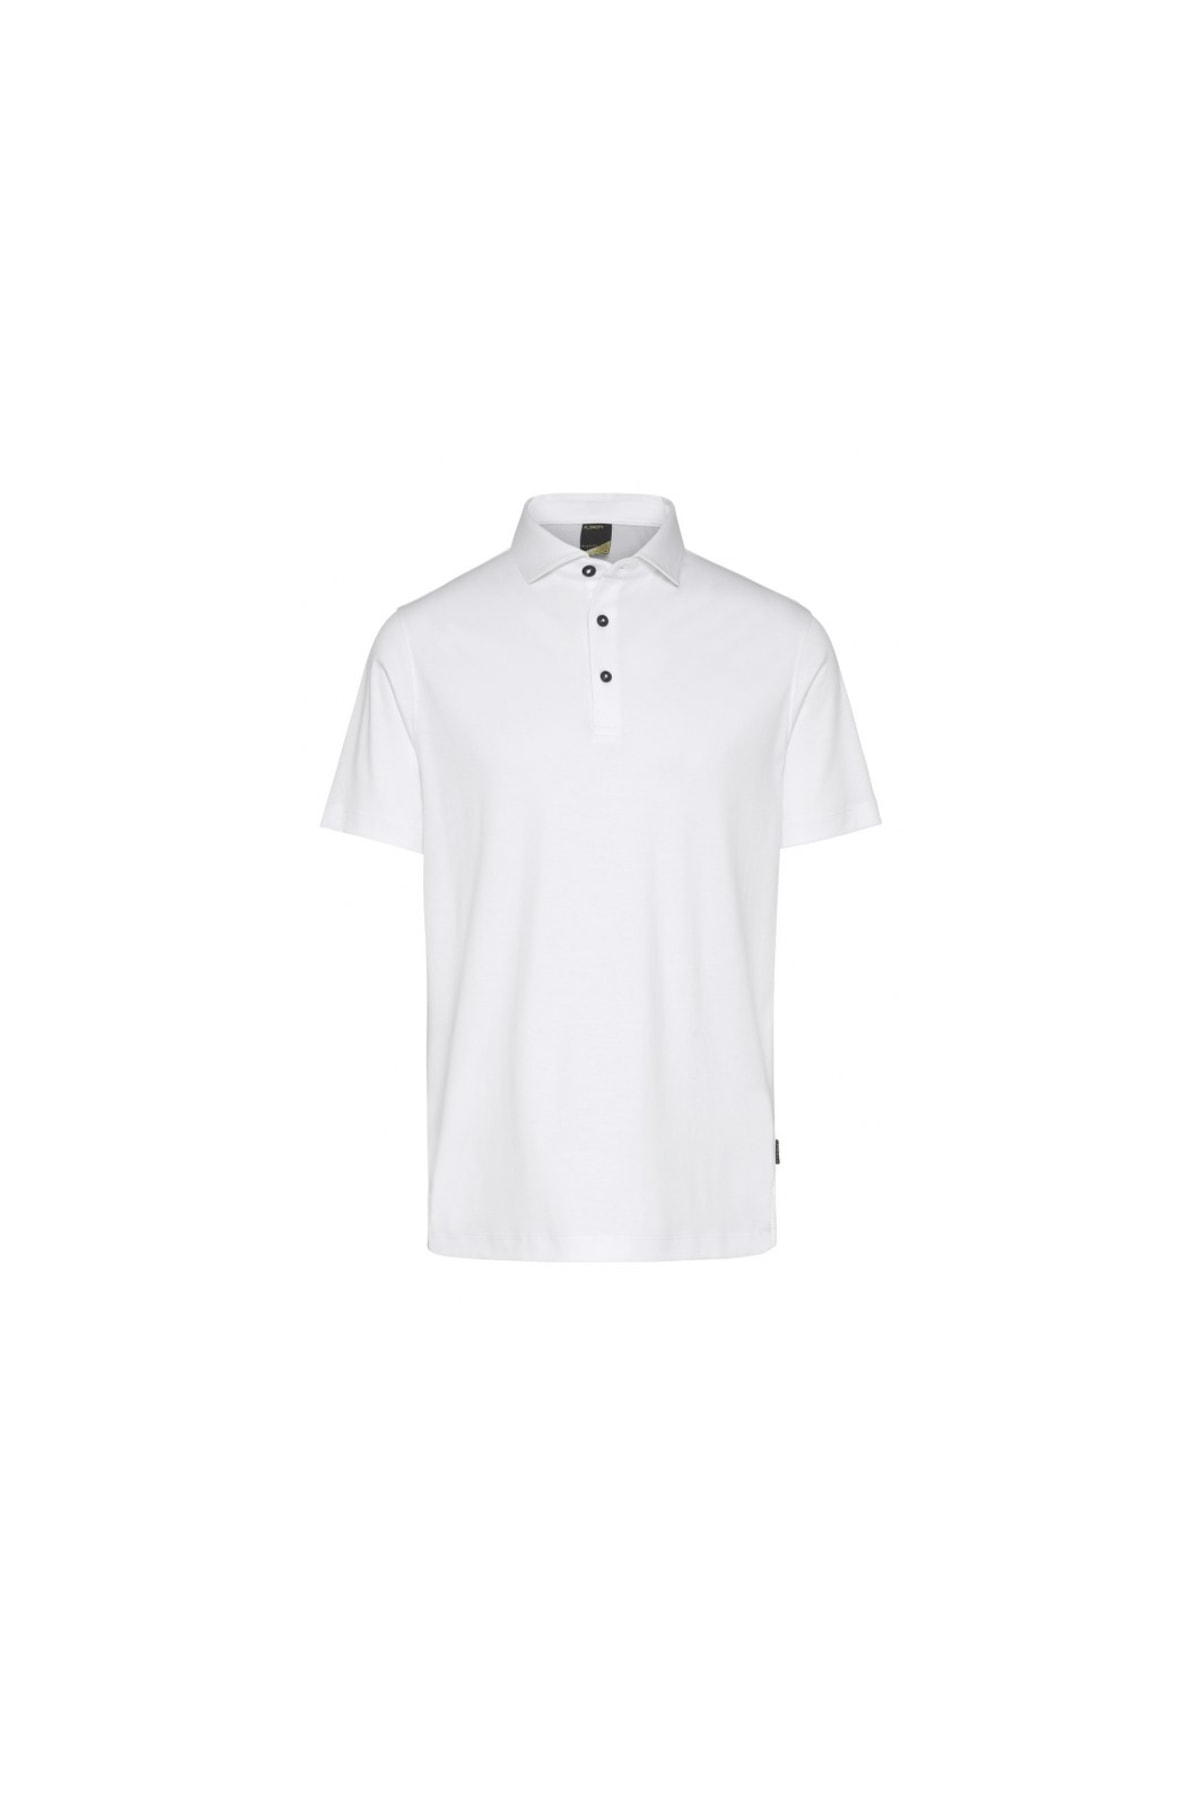 BUGATTI Hemd Weiß Regular Fit Fast ausverkauft